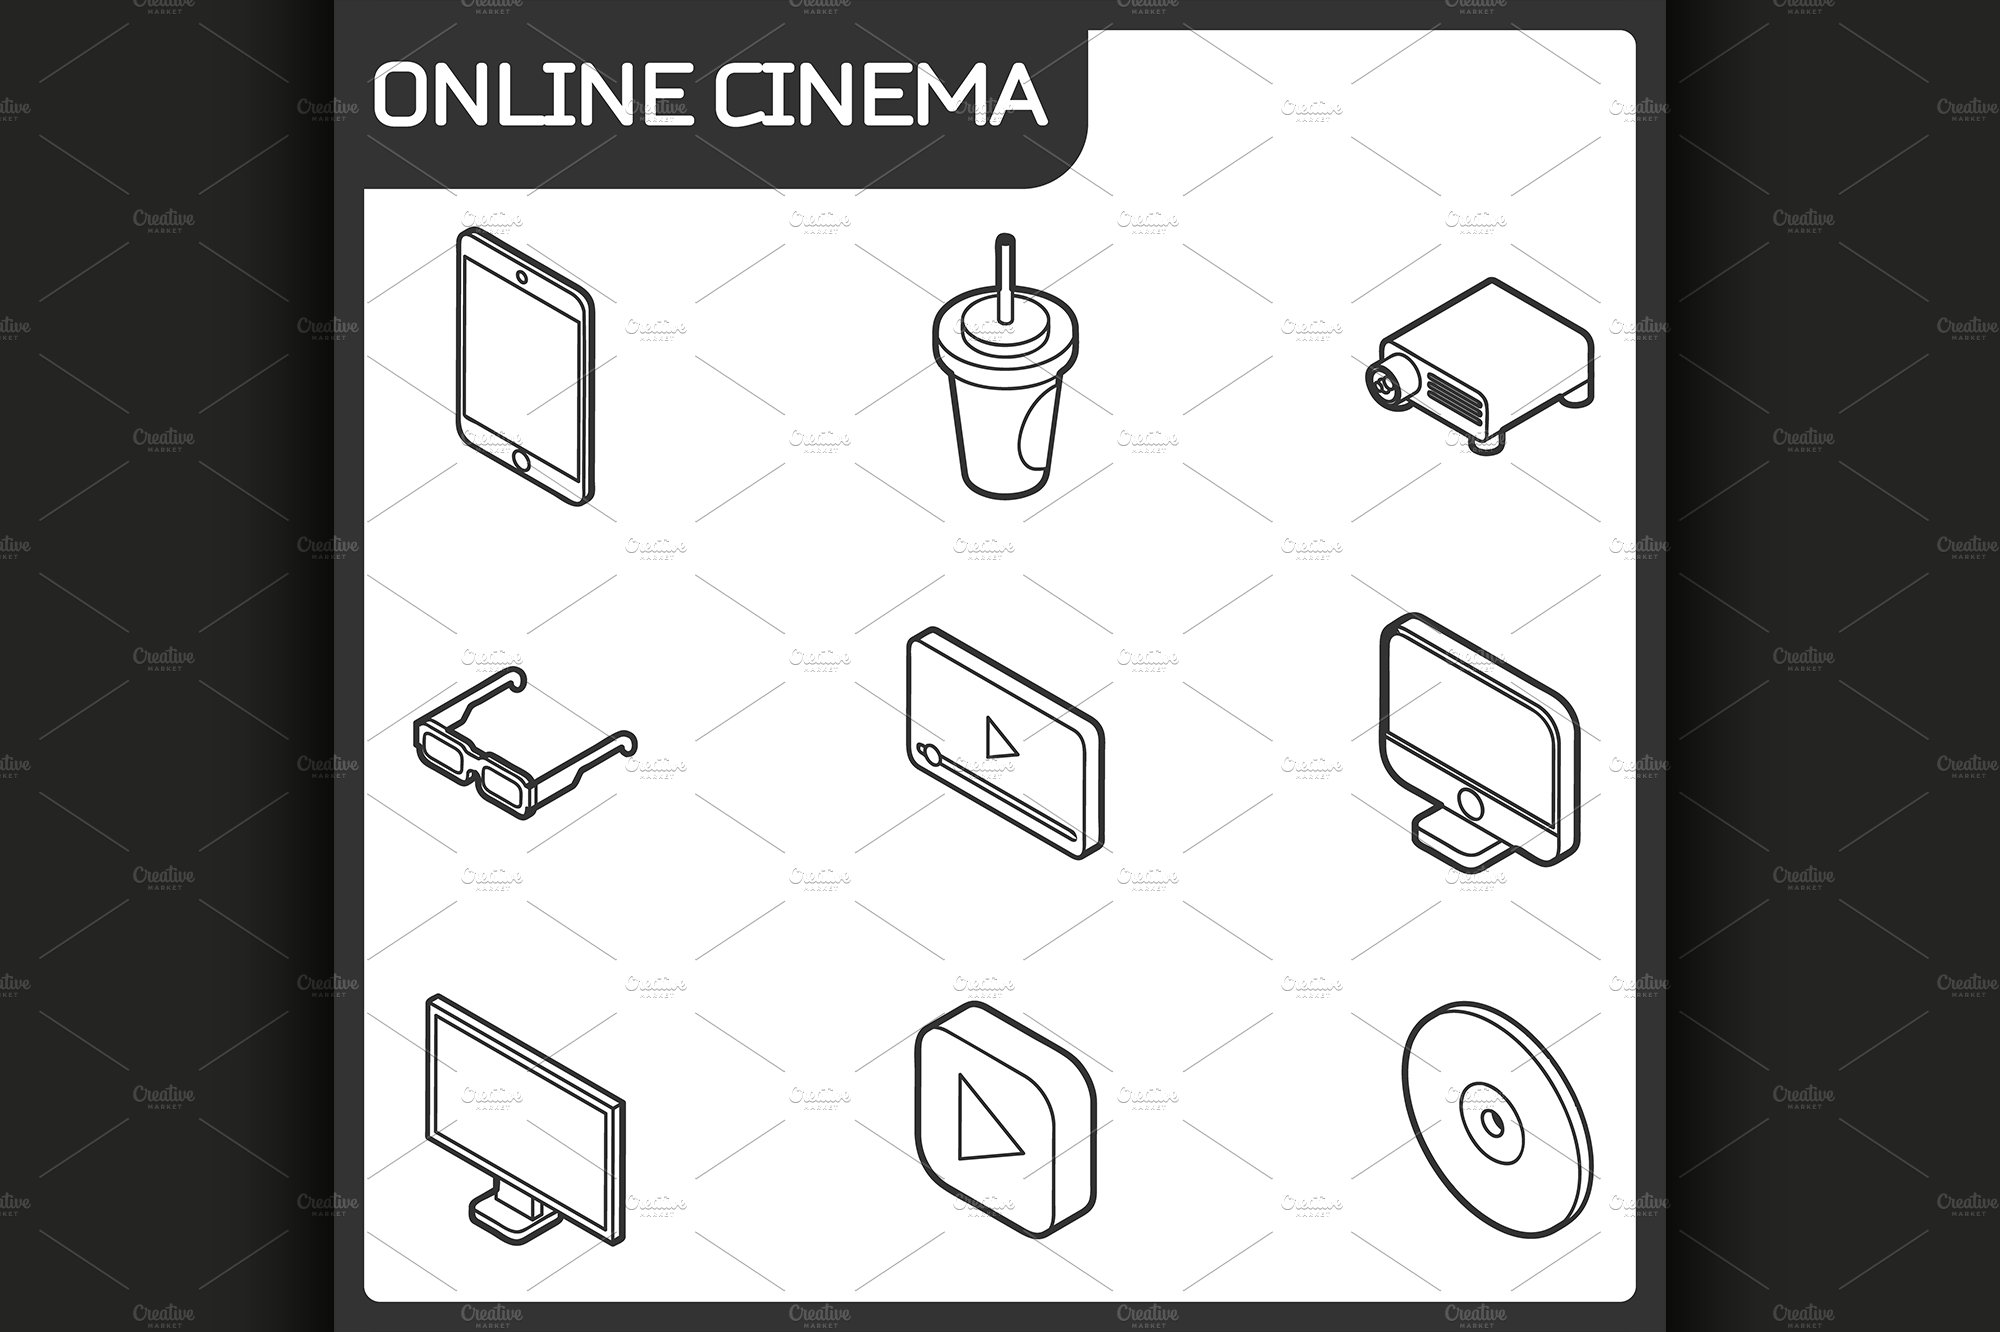 Online cinema isometric icons cover image.